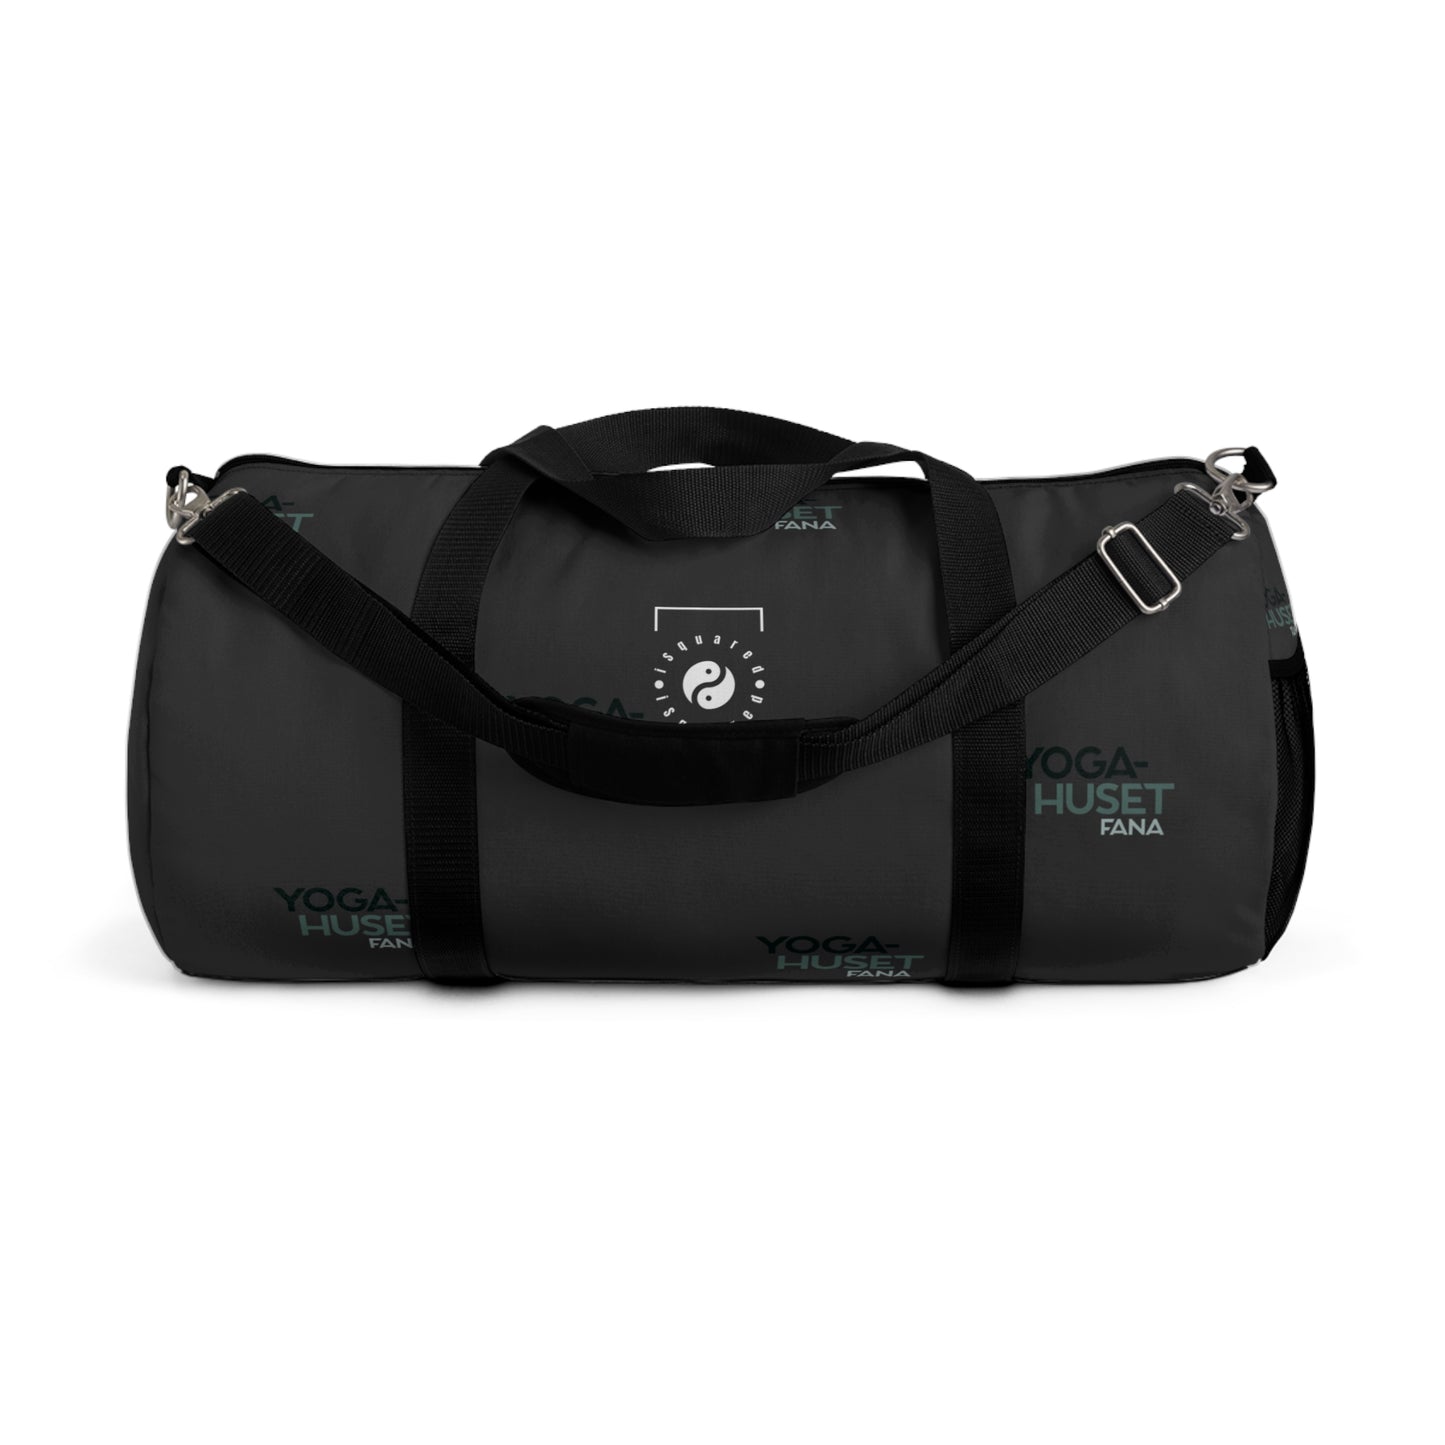 Yoga Huset Fana Collab 01 - Duffle Bag